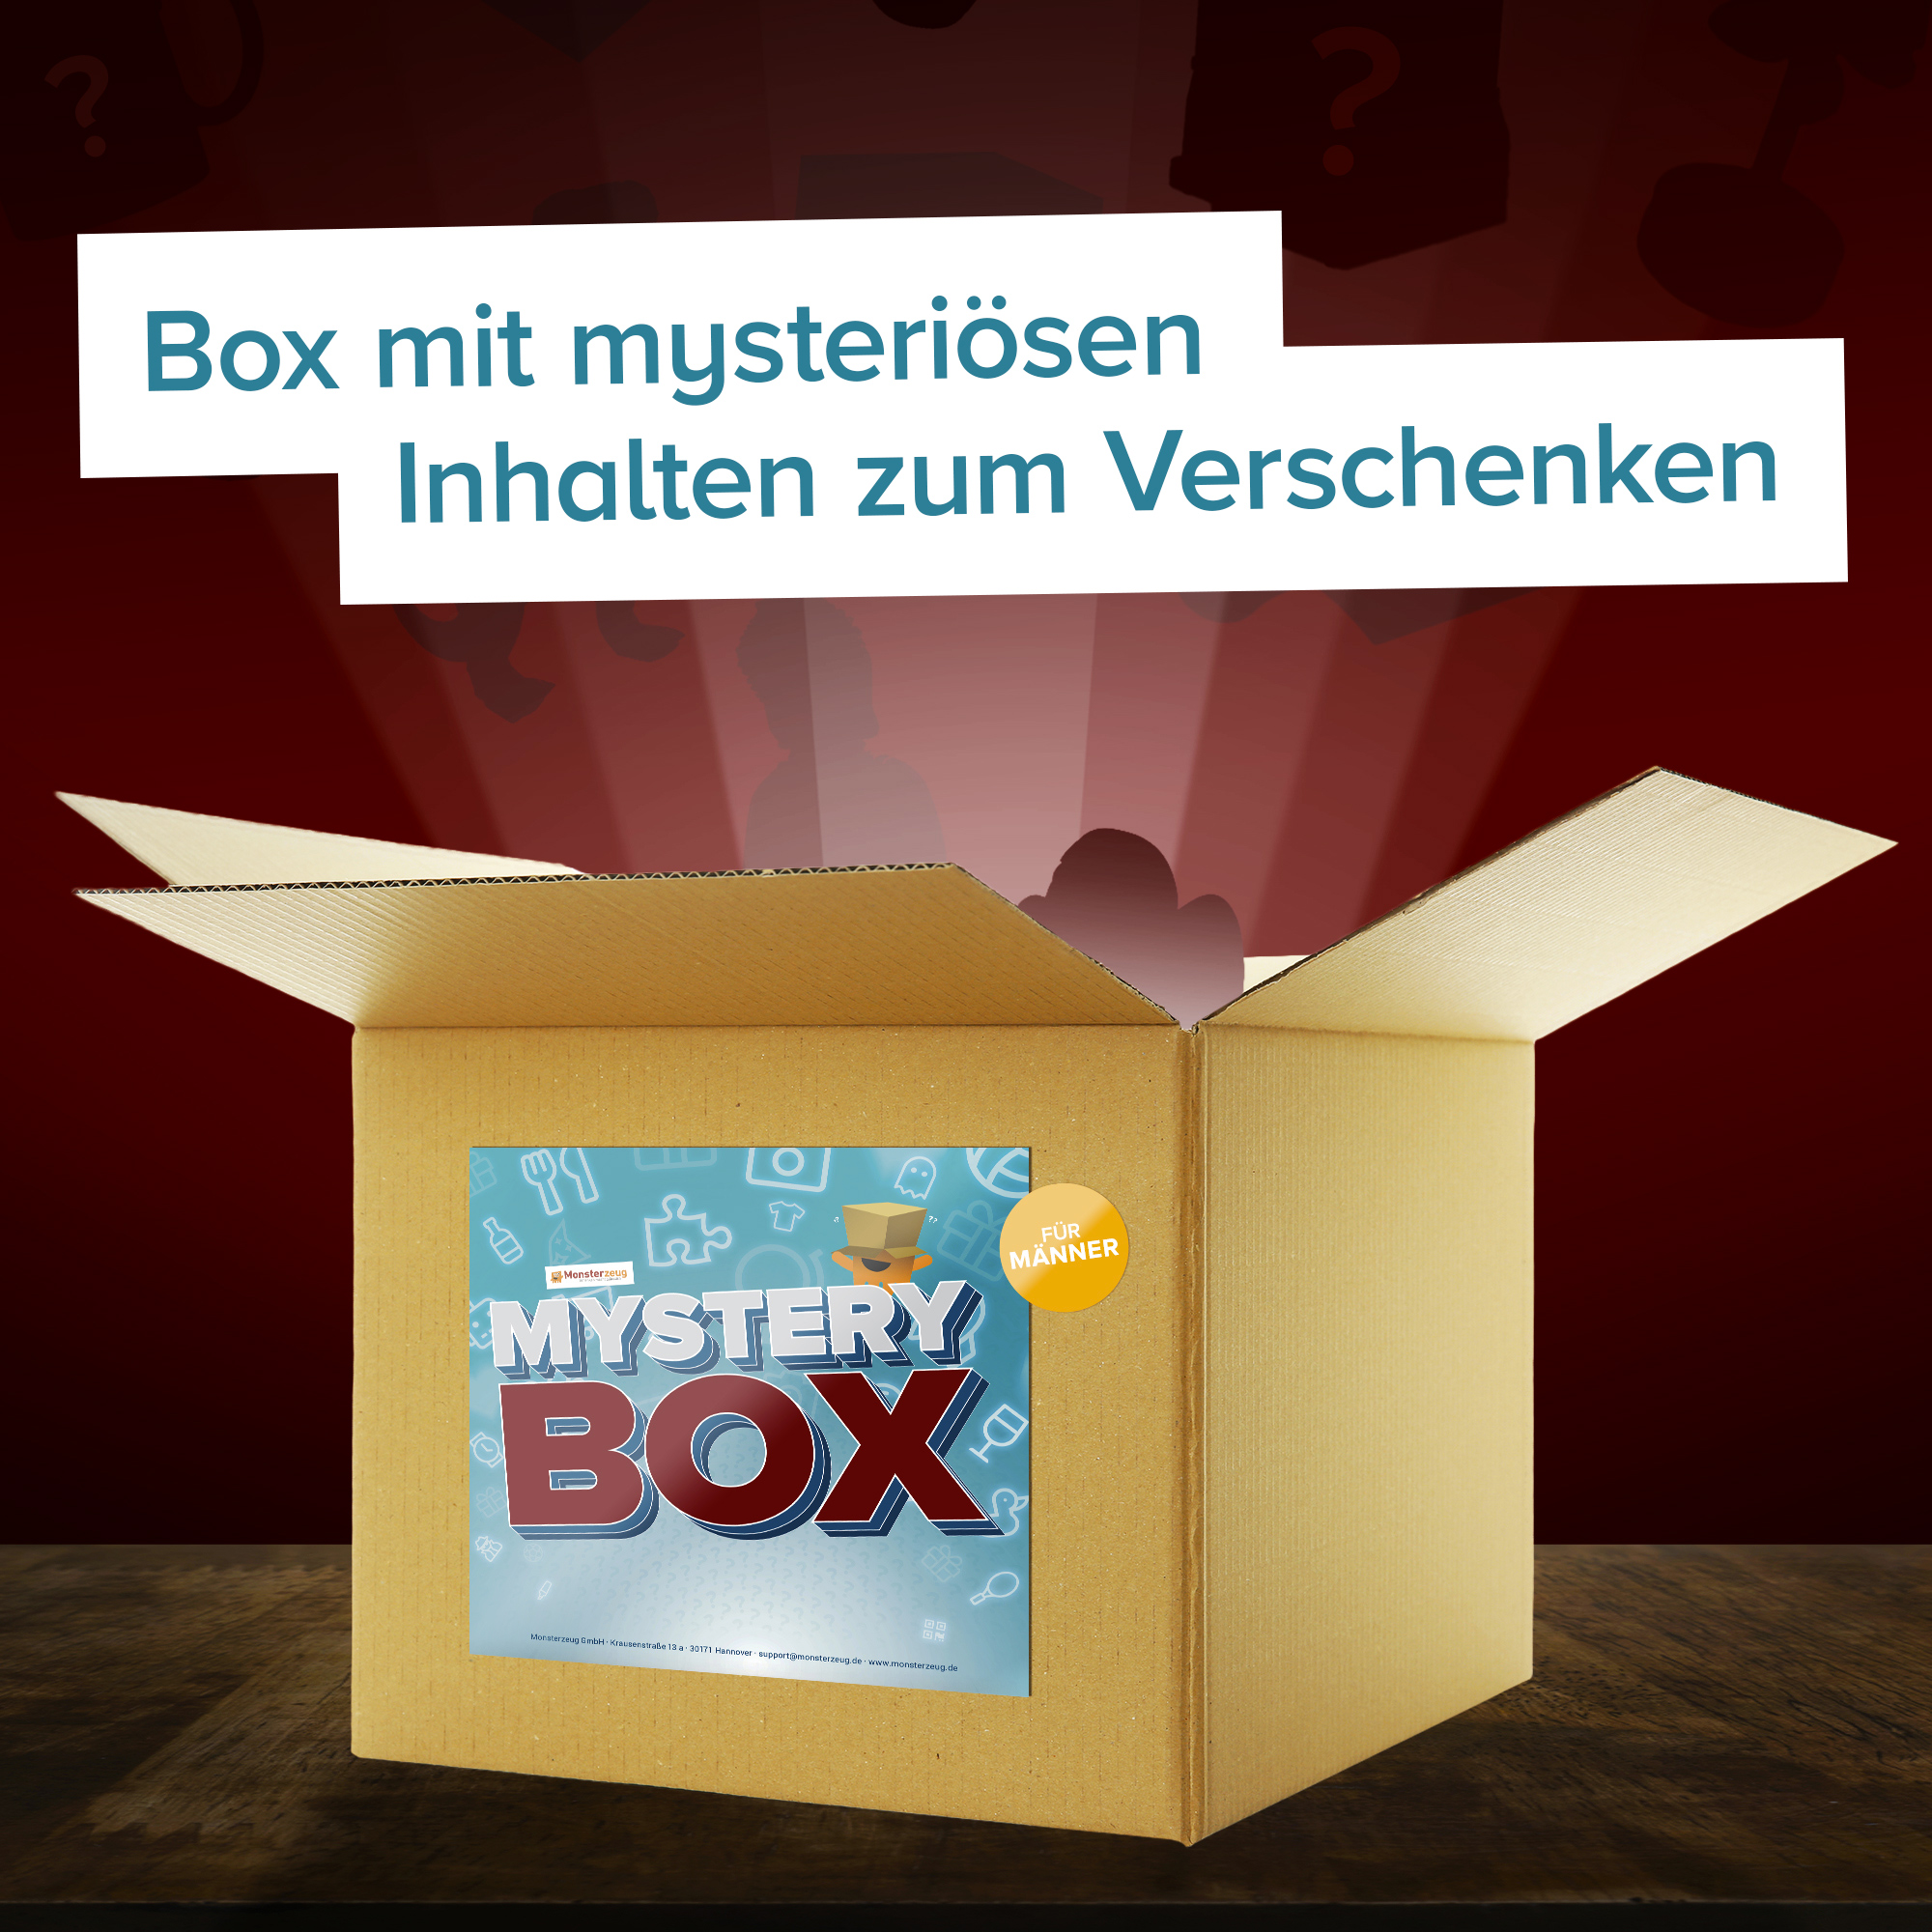 Mystery Box für Männer 3997 - 2